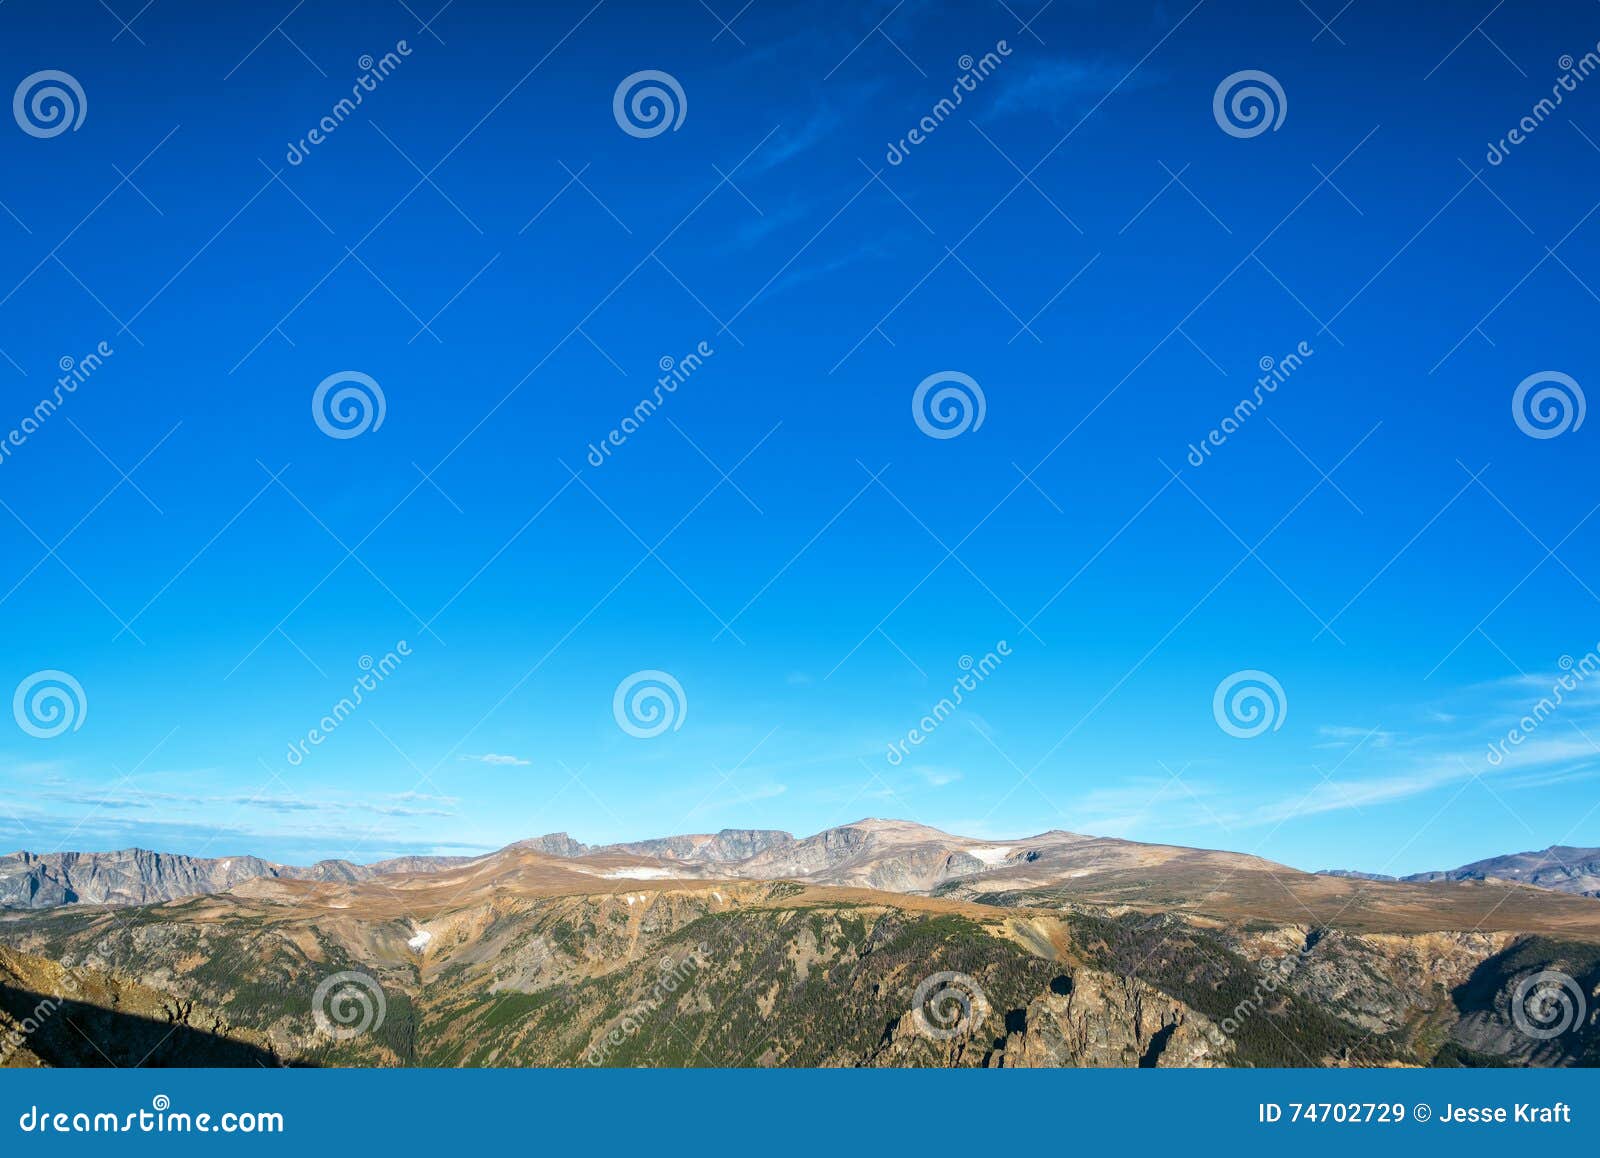 beartooth mountains and blue sky